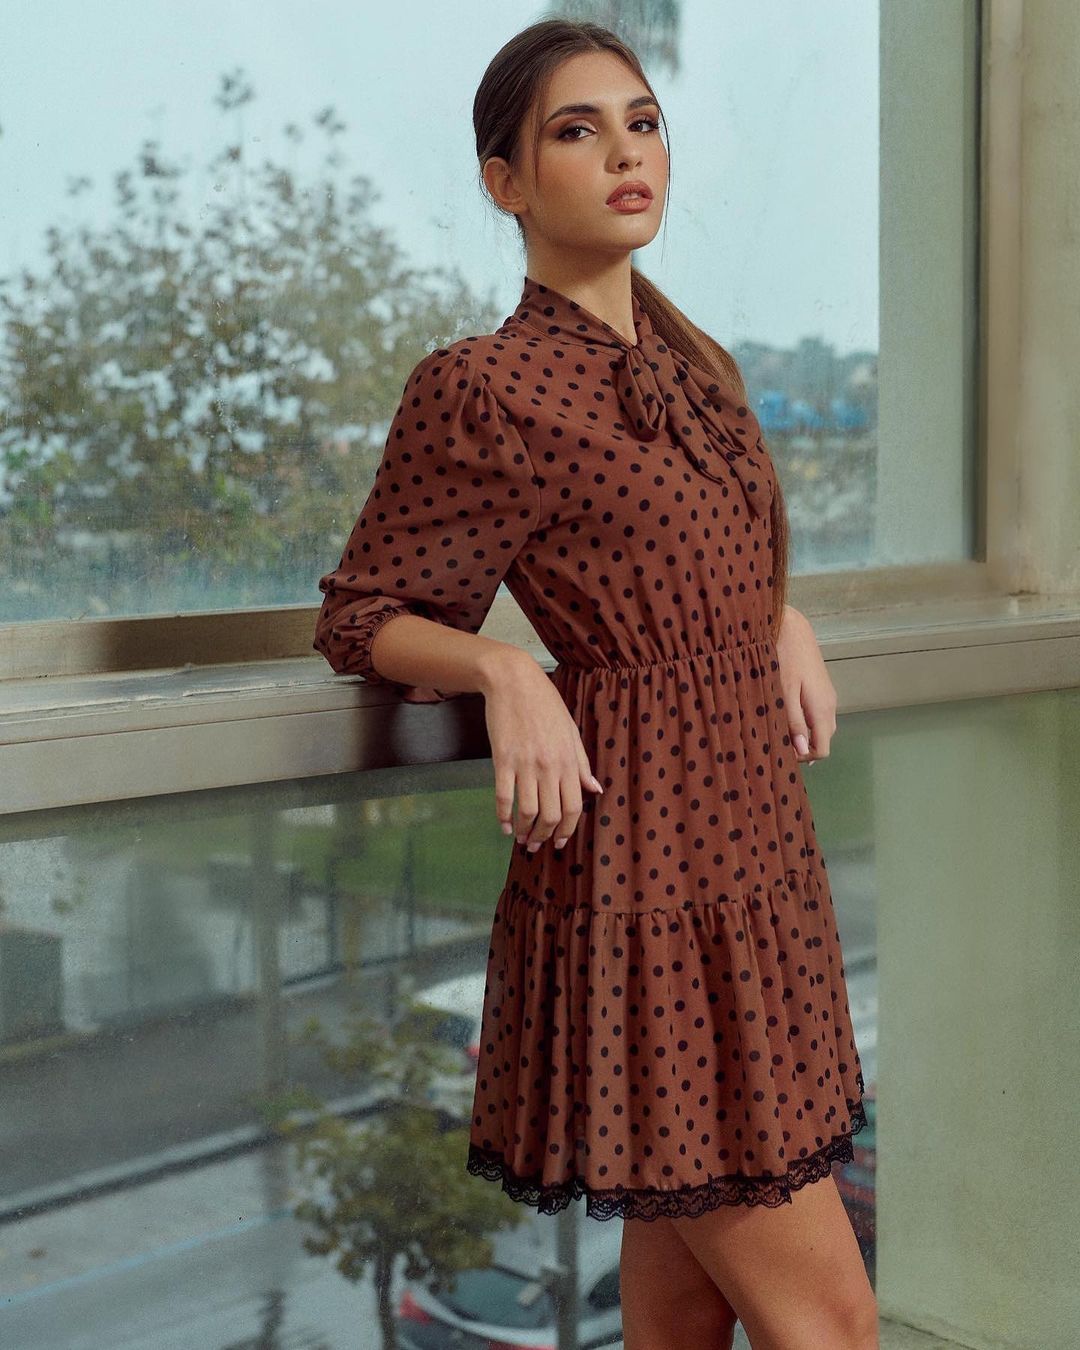 Italian model Valeria Sarnataro in Black Dotted Brown Dress During Photoshoot 11/19/2021 3